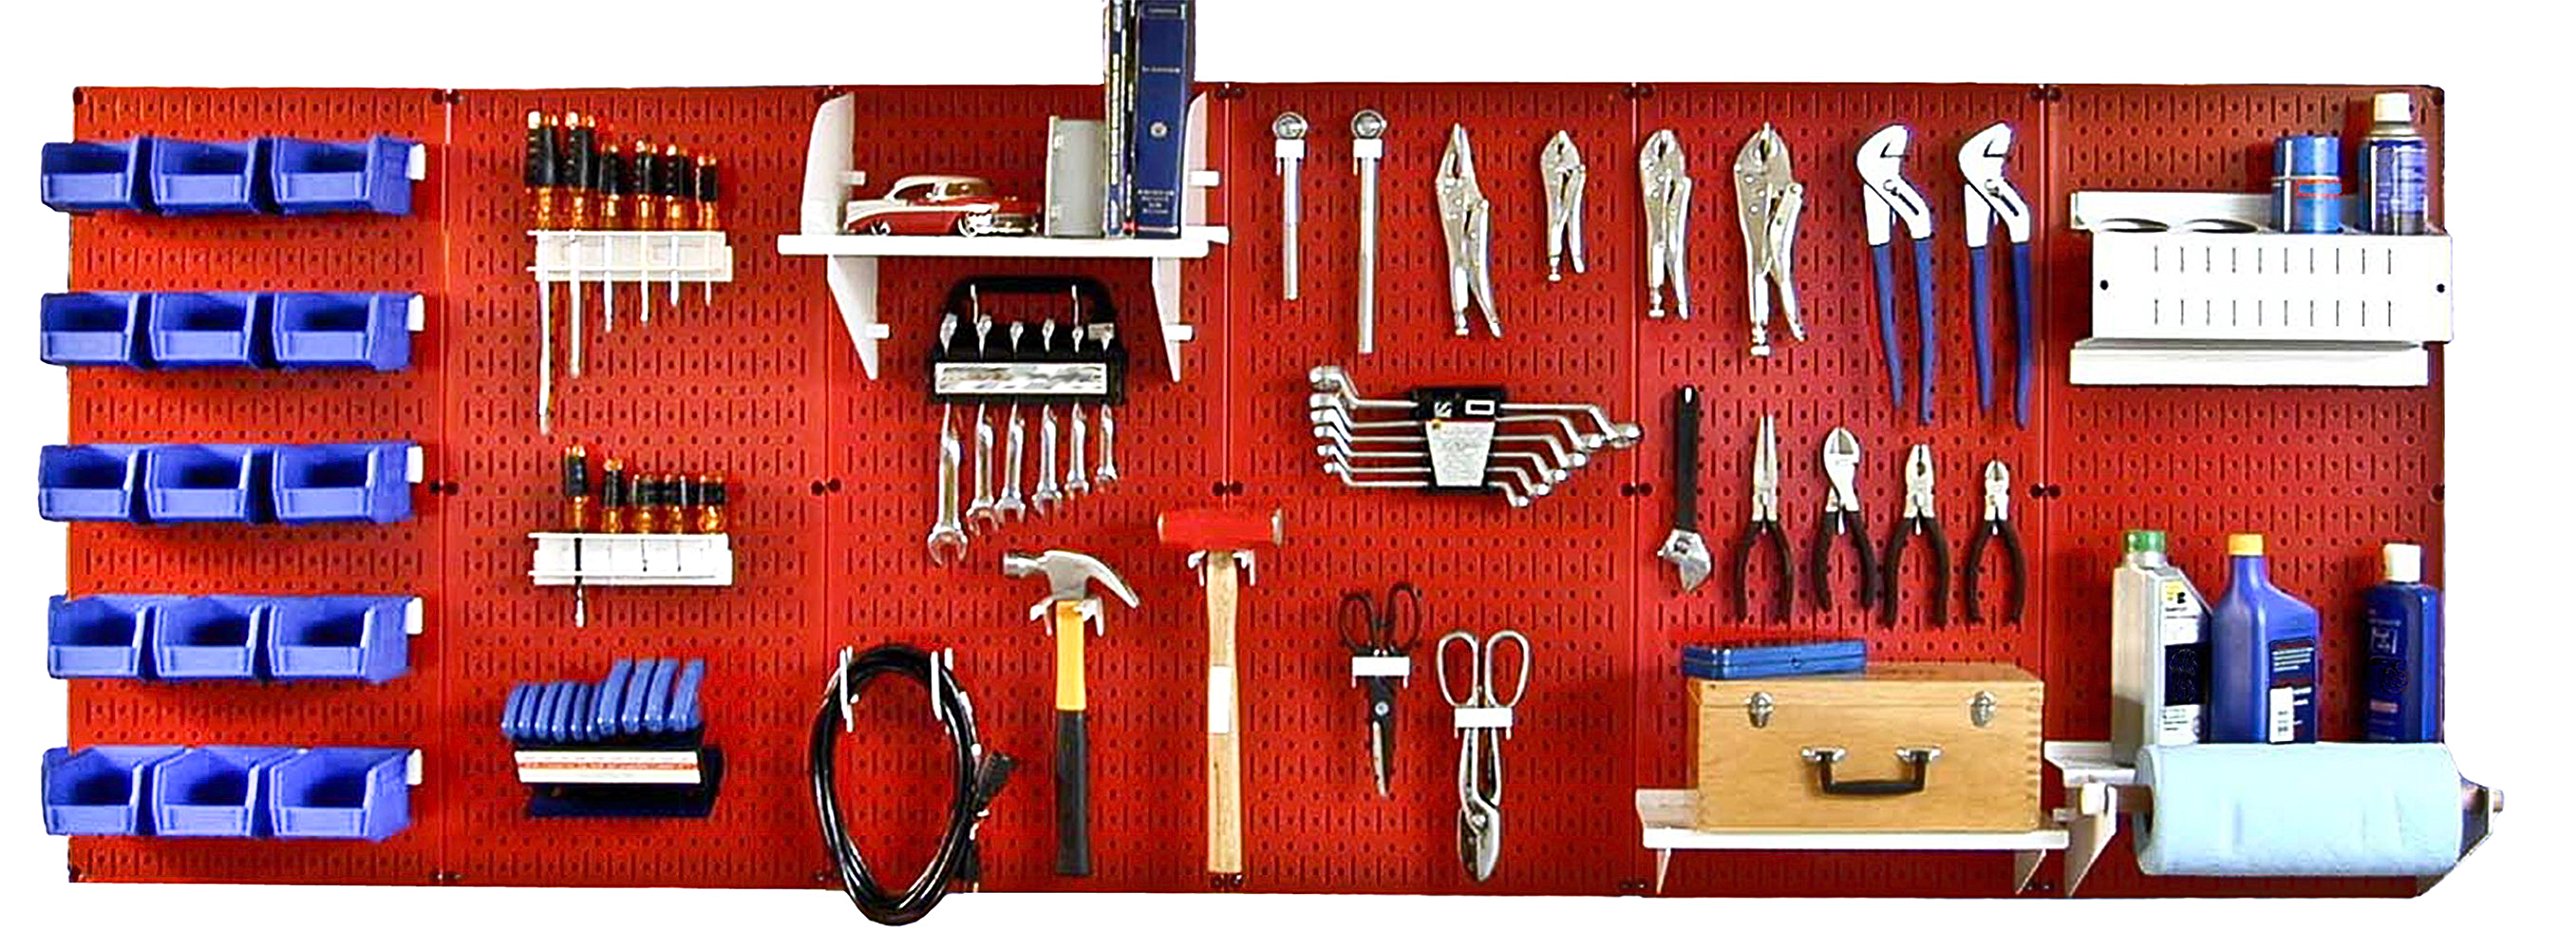 Wall Control Master Workbench Storage Kit - Red Metal Pegboard